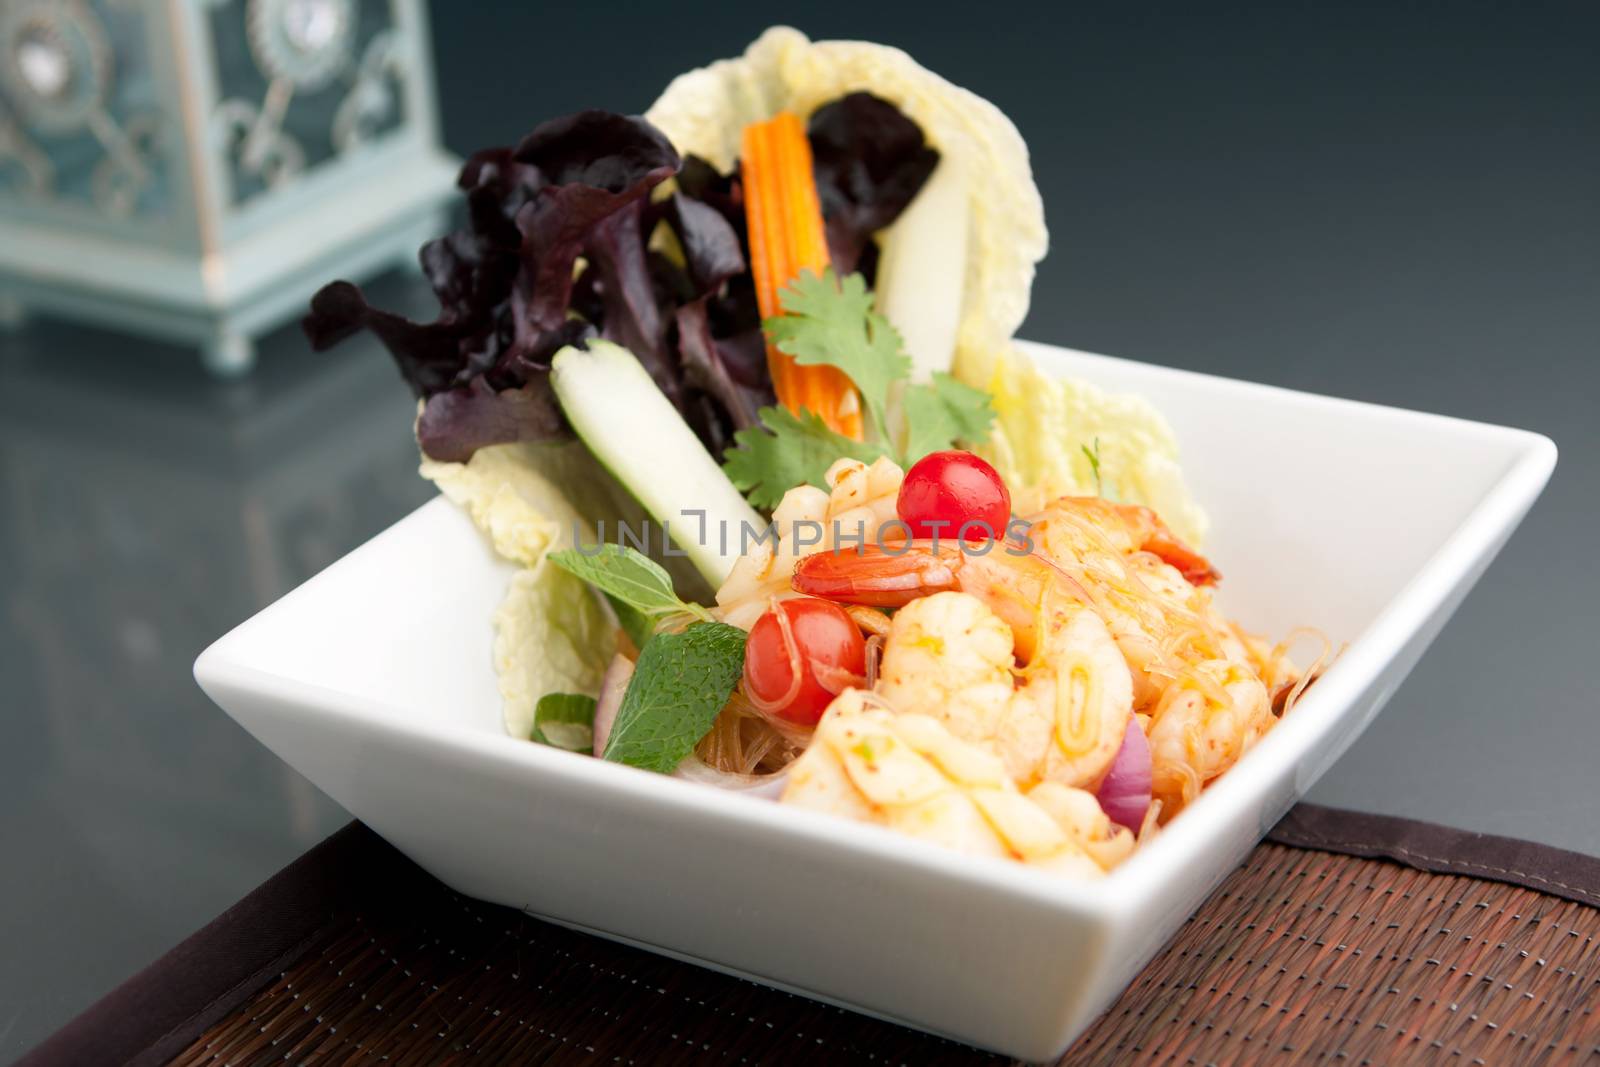 Thailand style shrimp and squid salad with veggies.